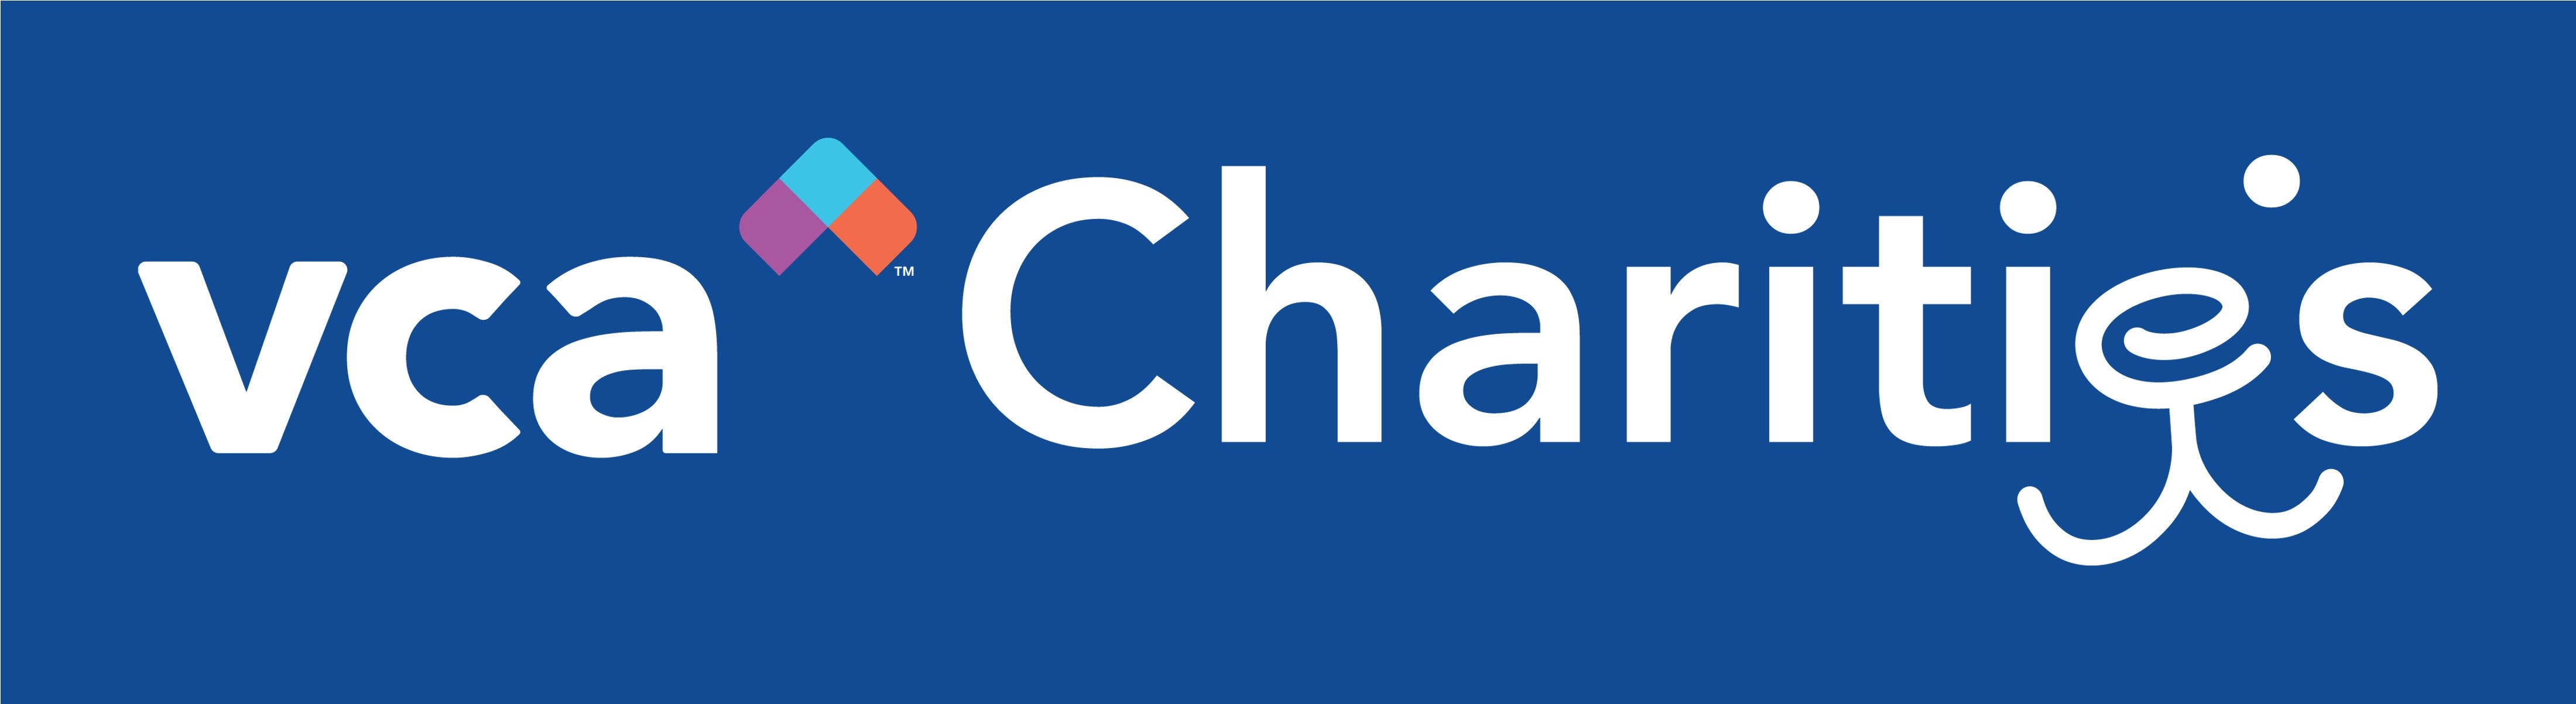 VCA Charities Logo Boop My Nose